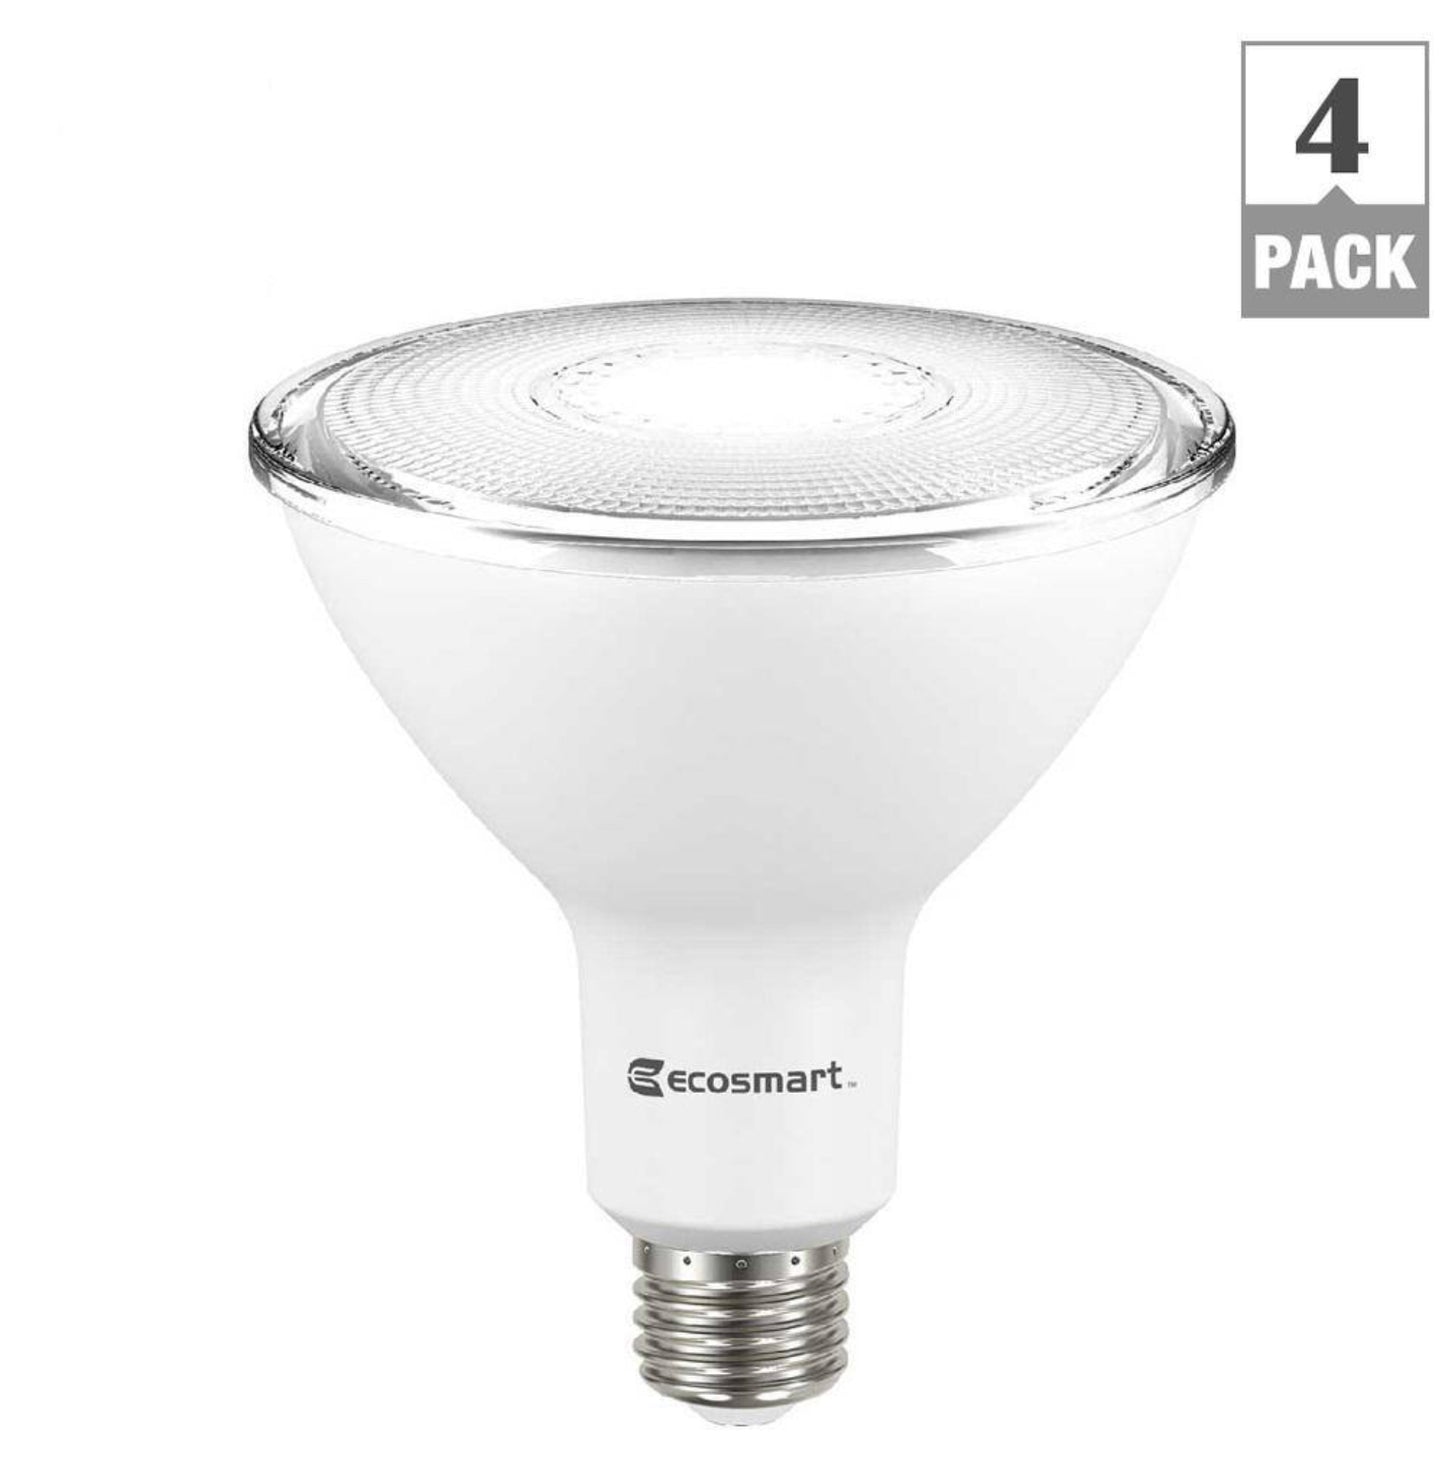 Ecosmart 90-Watt Equivalent PAR38 Non-Dimmable Flood LED Light Bulb Daylight (4-Pack) Damaged Box